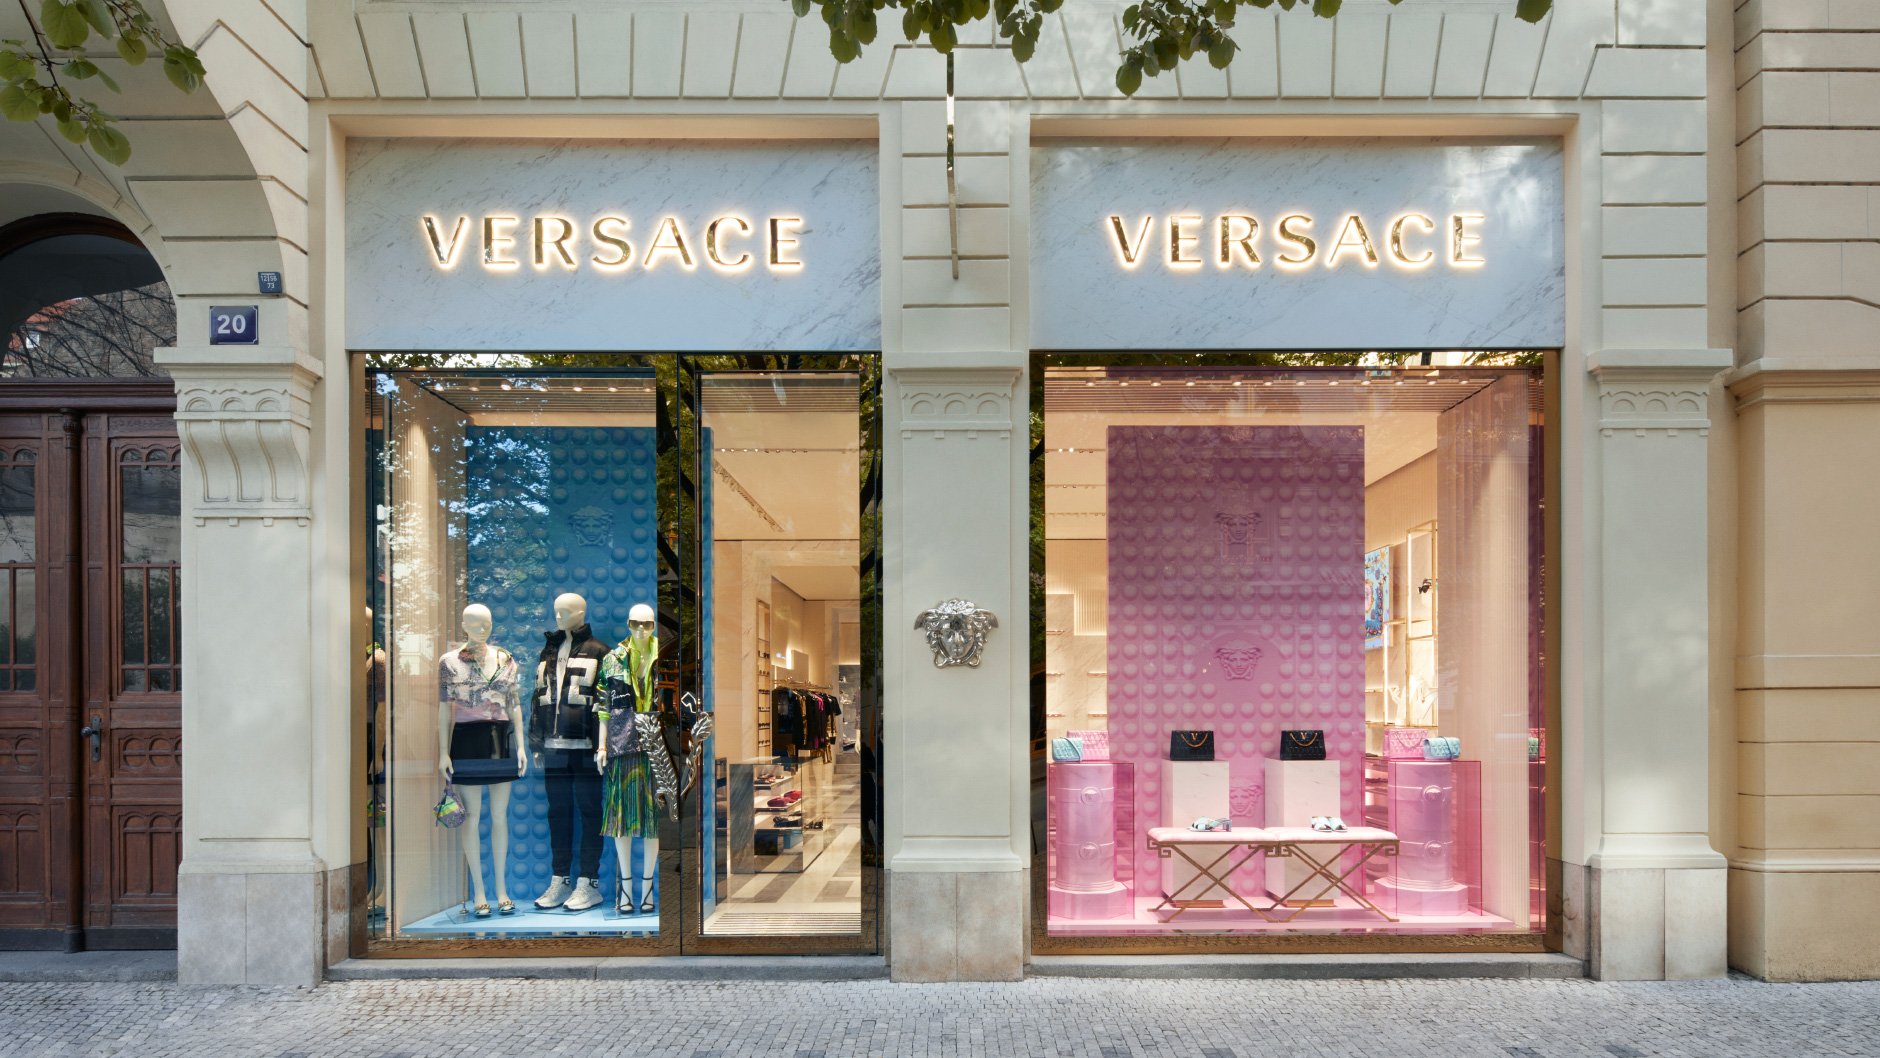 Visit your local Versace at Parizska 20 in Prague, Czechia to...